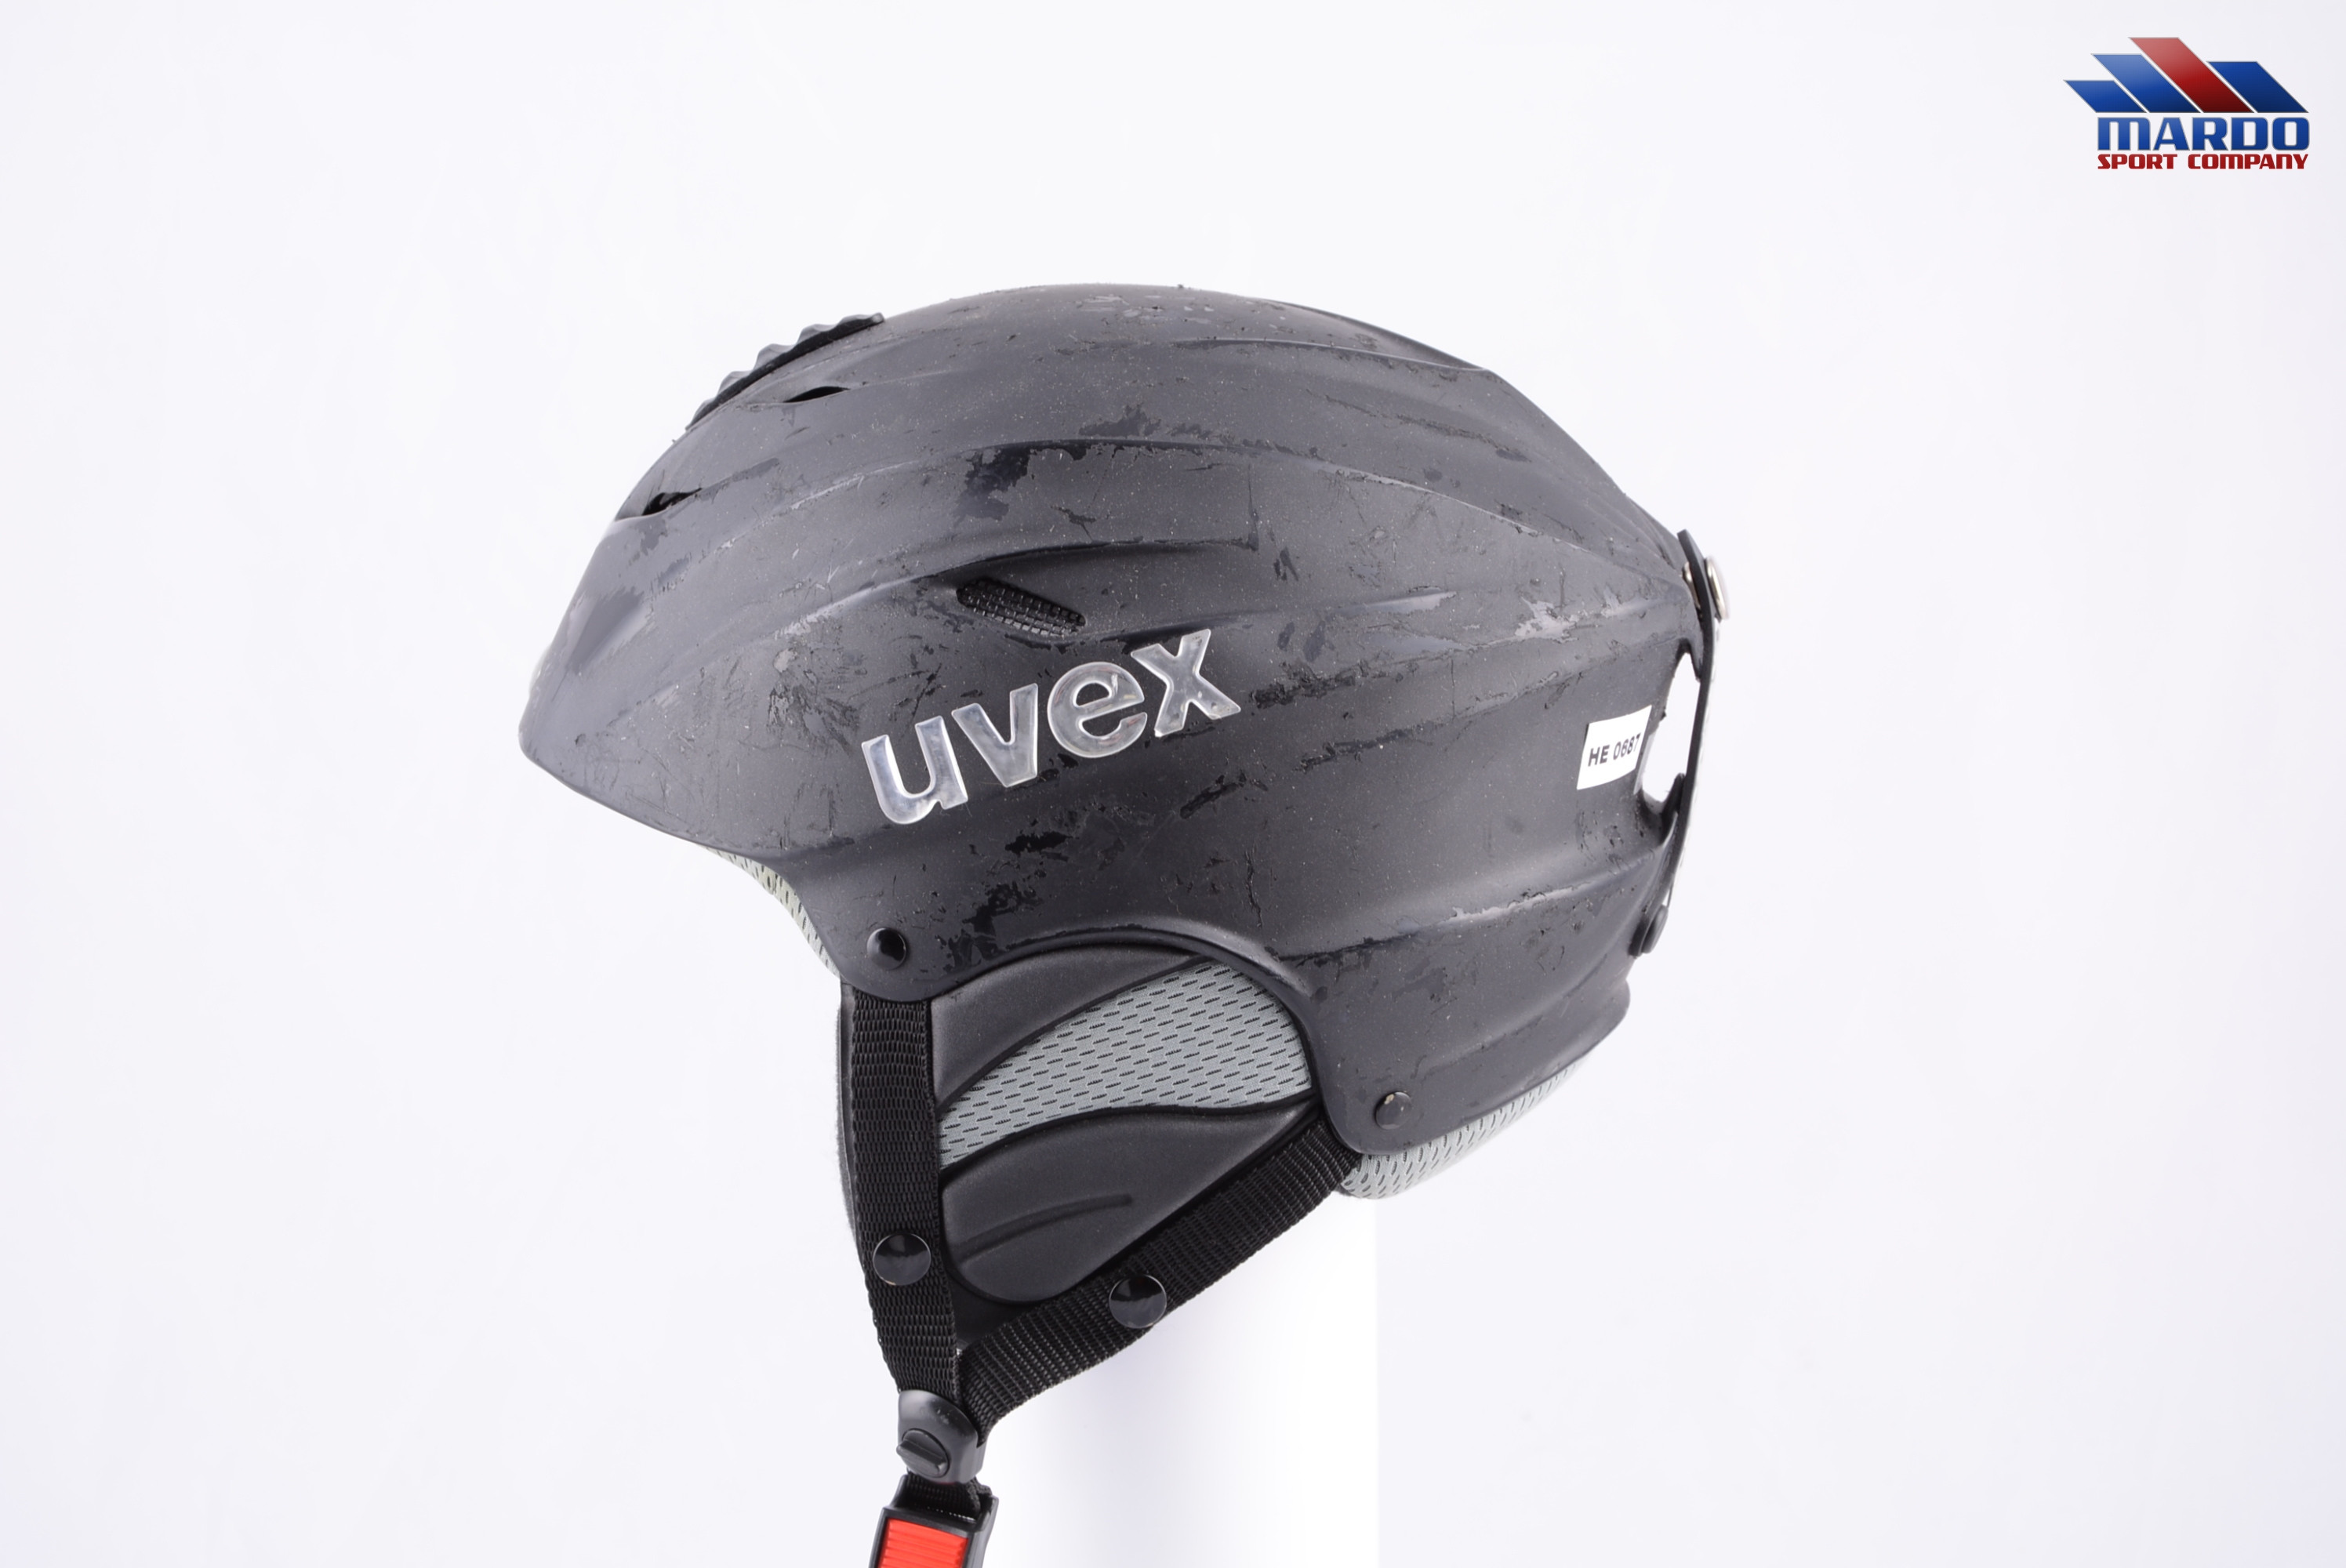 Doe het niet Serena schildpad ski/snowboard helmet UVEX XW 003 black, air ventilation - Mardosport.com